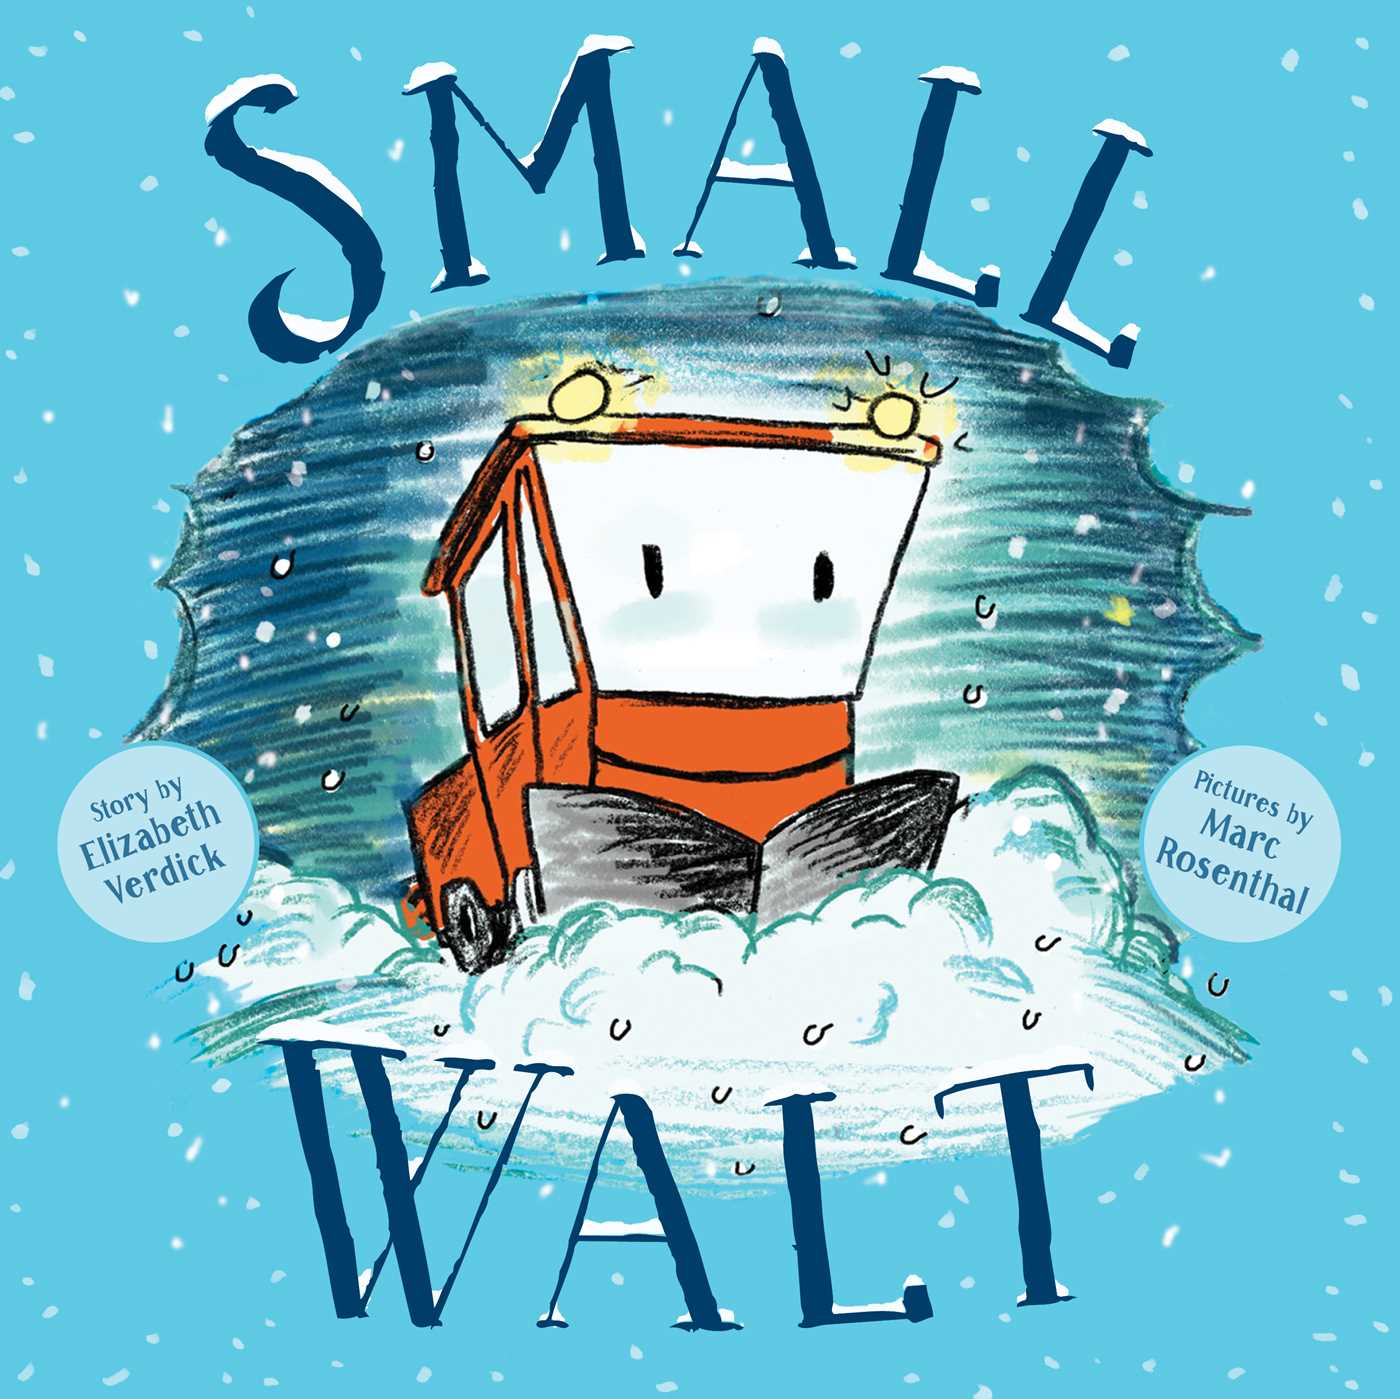 Small Walt – by Elizabeth Verdick and Marc Rosenthal